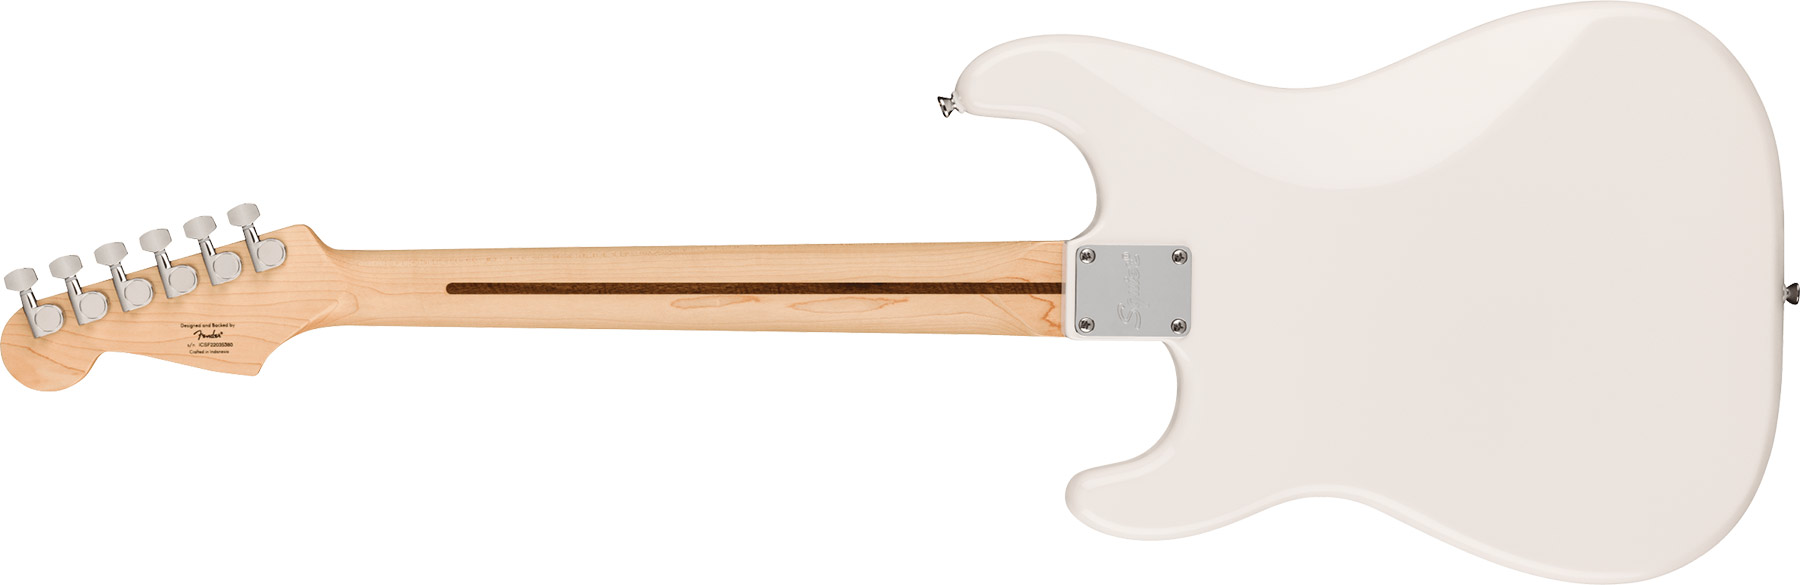 Squier Strat Sonic Hardtail 3s Ht Mn - Arctic White - Str shape electric guitar - Variation 1